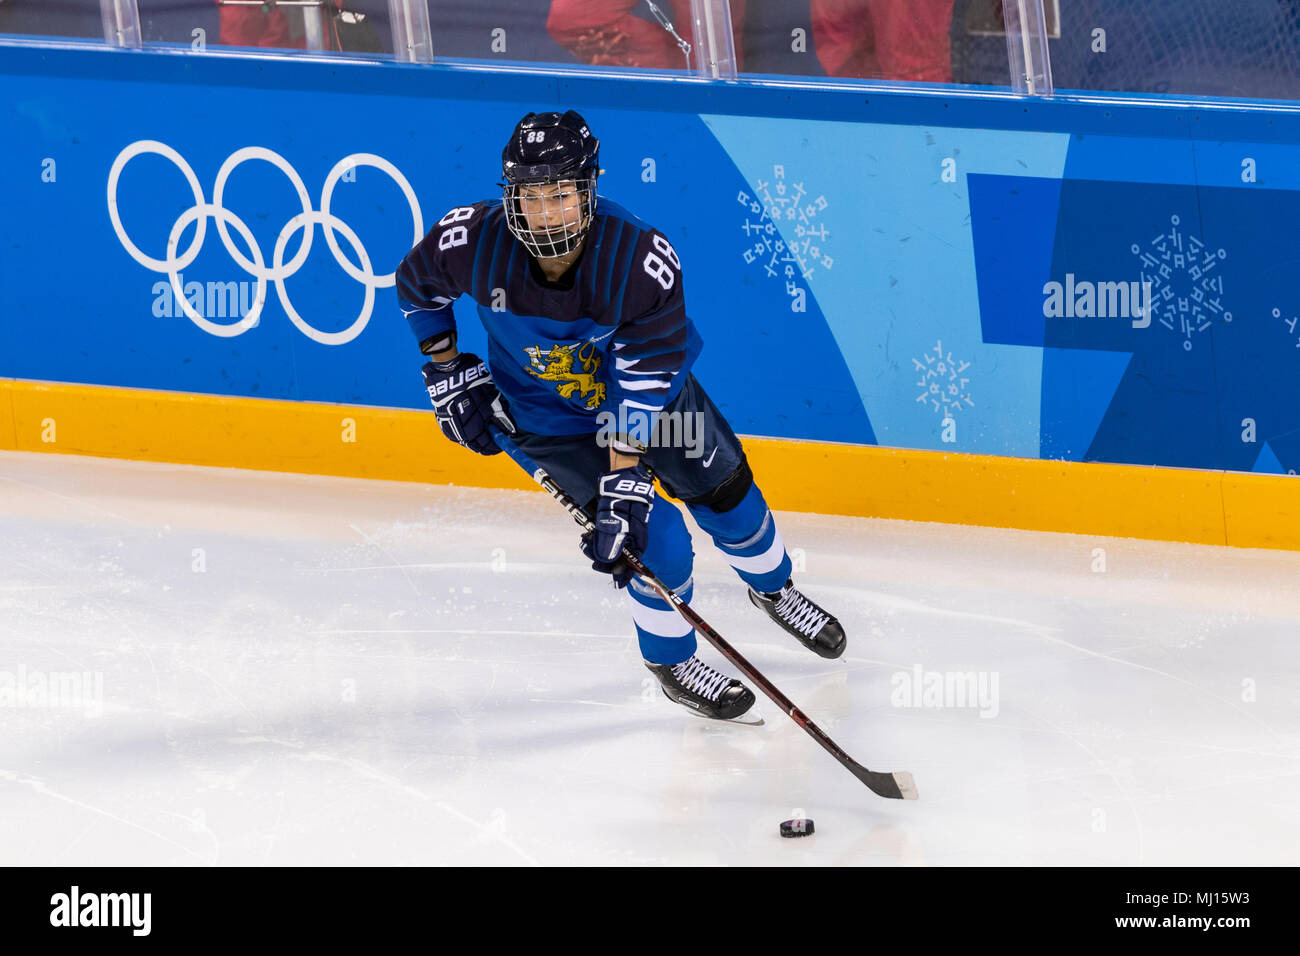 2018 Olympic Winter Games - Women's Hockey